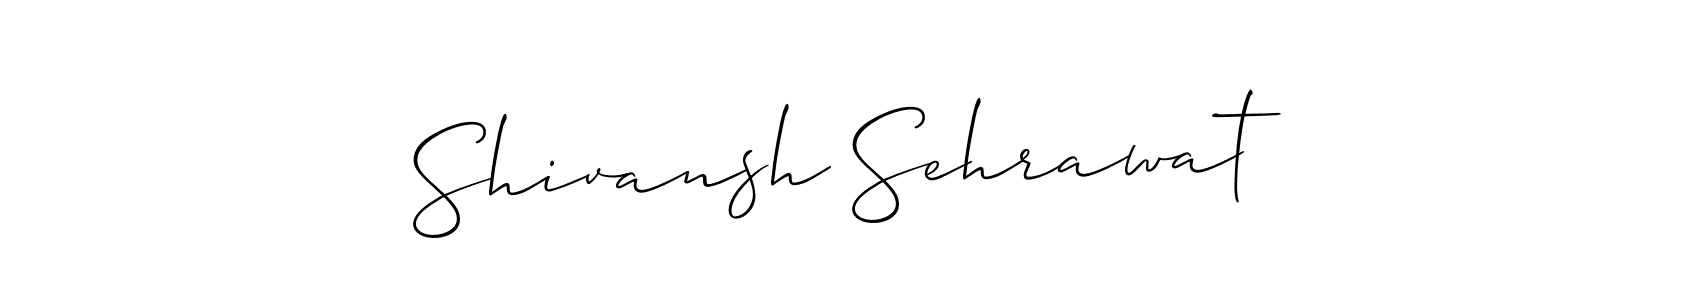 How to make Shivansh Sehrawat signature? Allison_Script is a professional autograph style. Create handwritten signature for Shivansh Sehrawat name. Shivansh Sehrawat signature style 2 images and pictures png